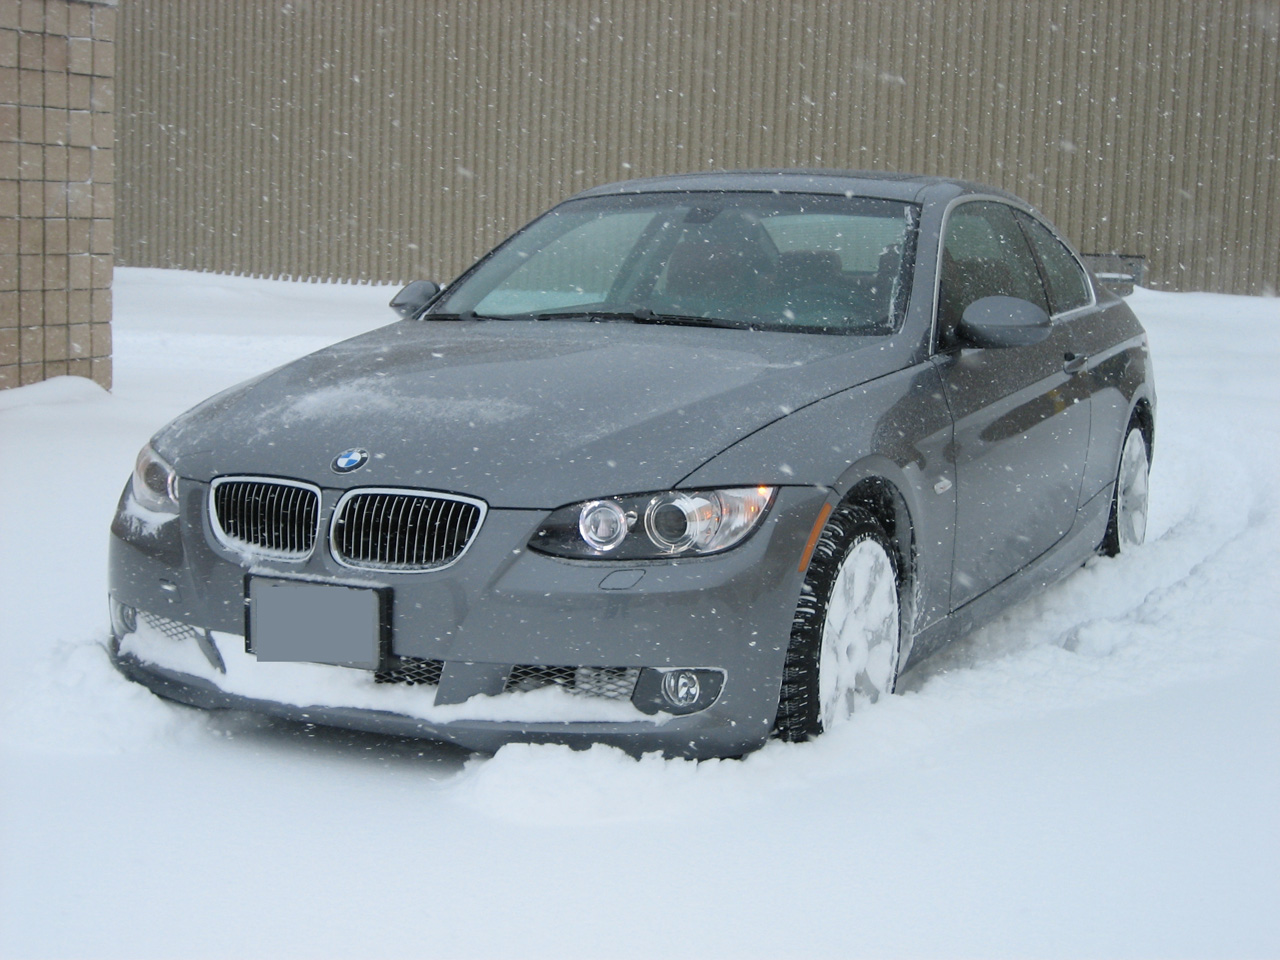 Bmw 335xi in snow